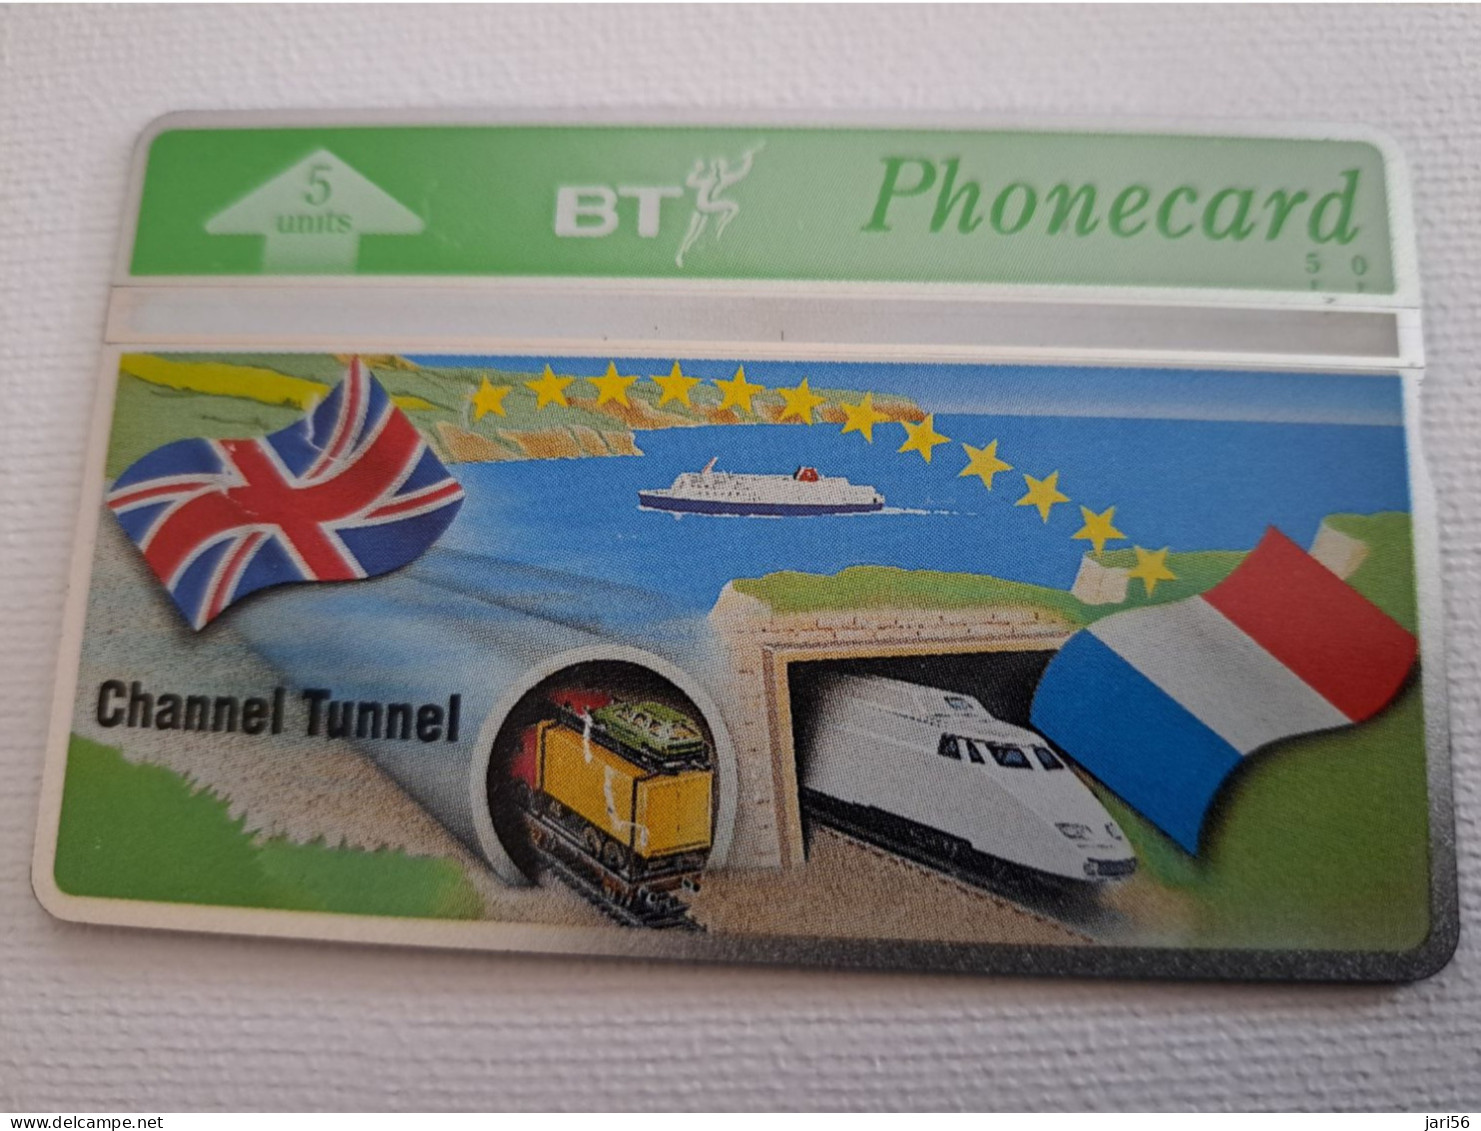 GREAT BRETAGNE/ L & G  5 UNITS / CHANNEL TUNNEL/ TGV TRAIN/   / 405B /  MINT CARD **16576** - BT Overseas Issues